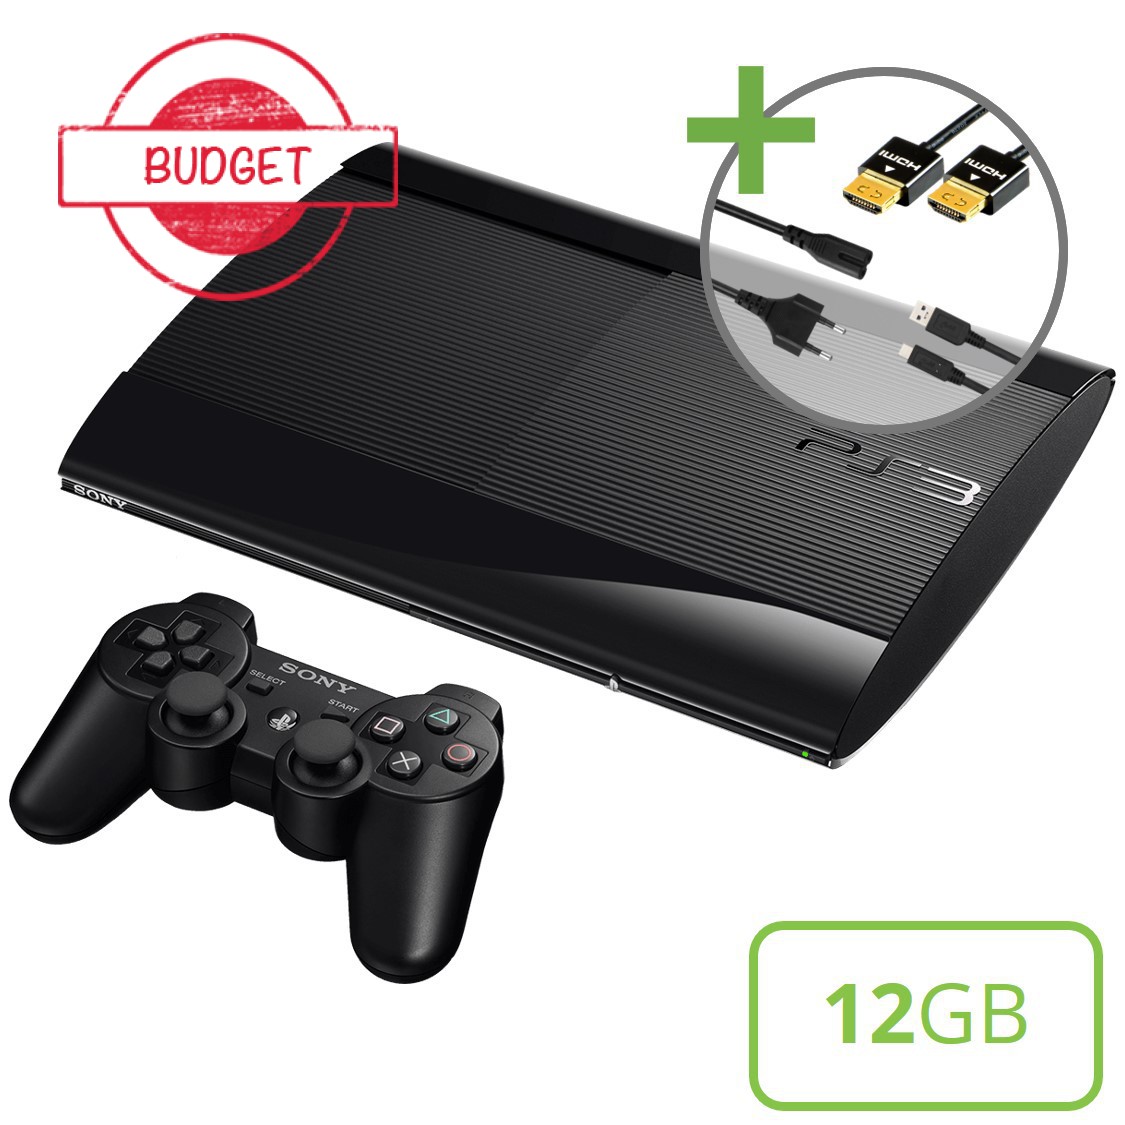 Sony PlayStation 3 Super Slim (12GB) Starter Pack - DualShock Edition - Budget - Playstation 3 Hardware